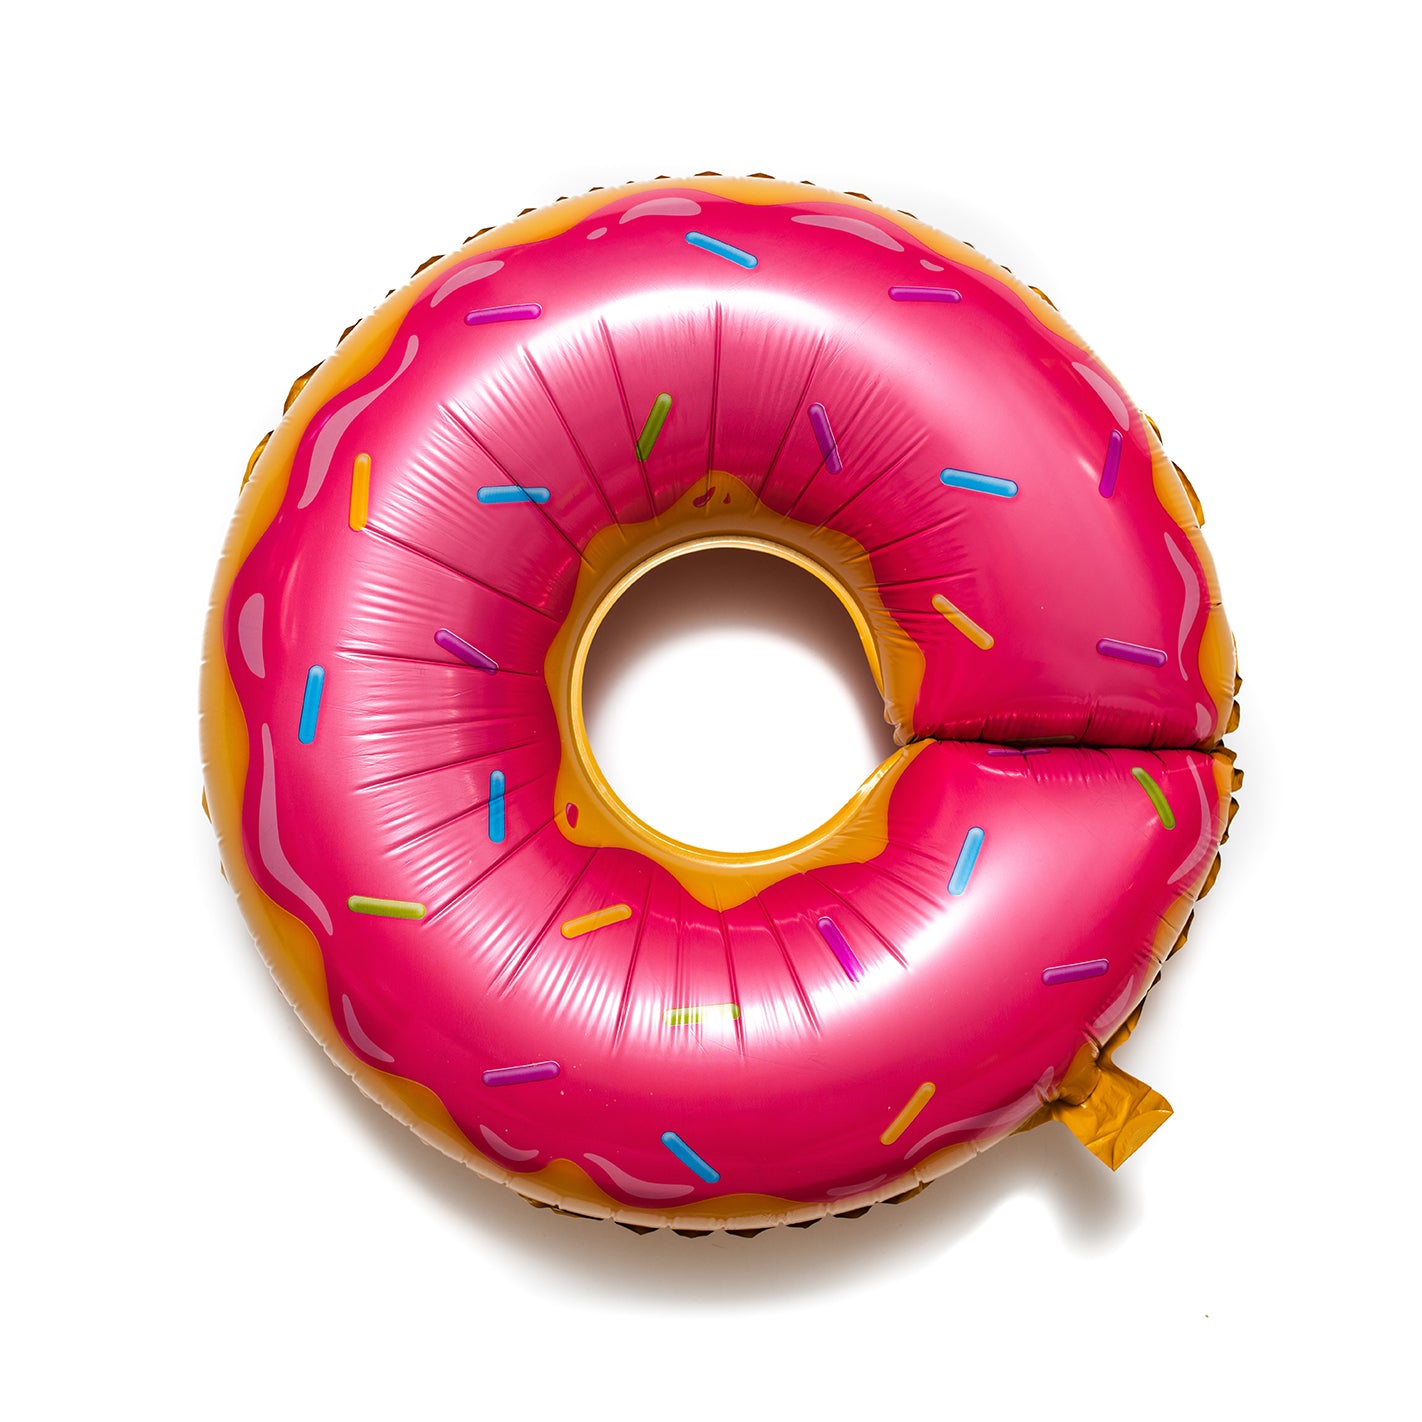 Donut Grow Up Foil Balloon Phrase Banner